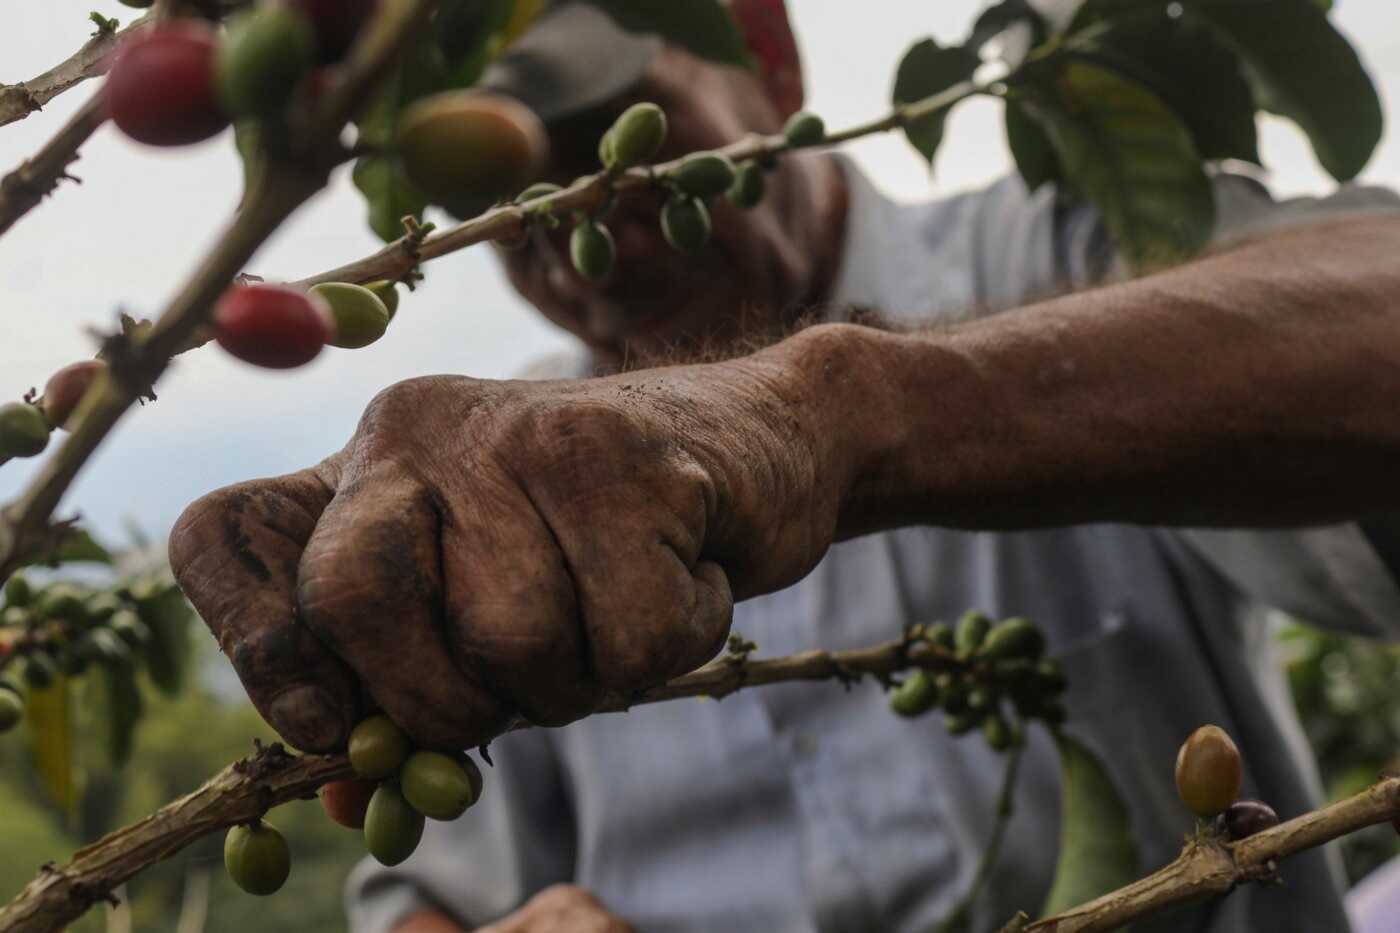 Coffee harvester picking coffee cherries